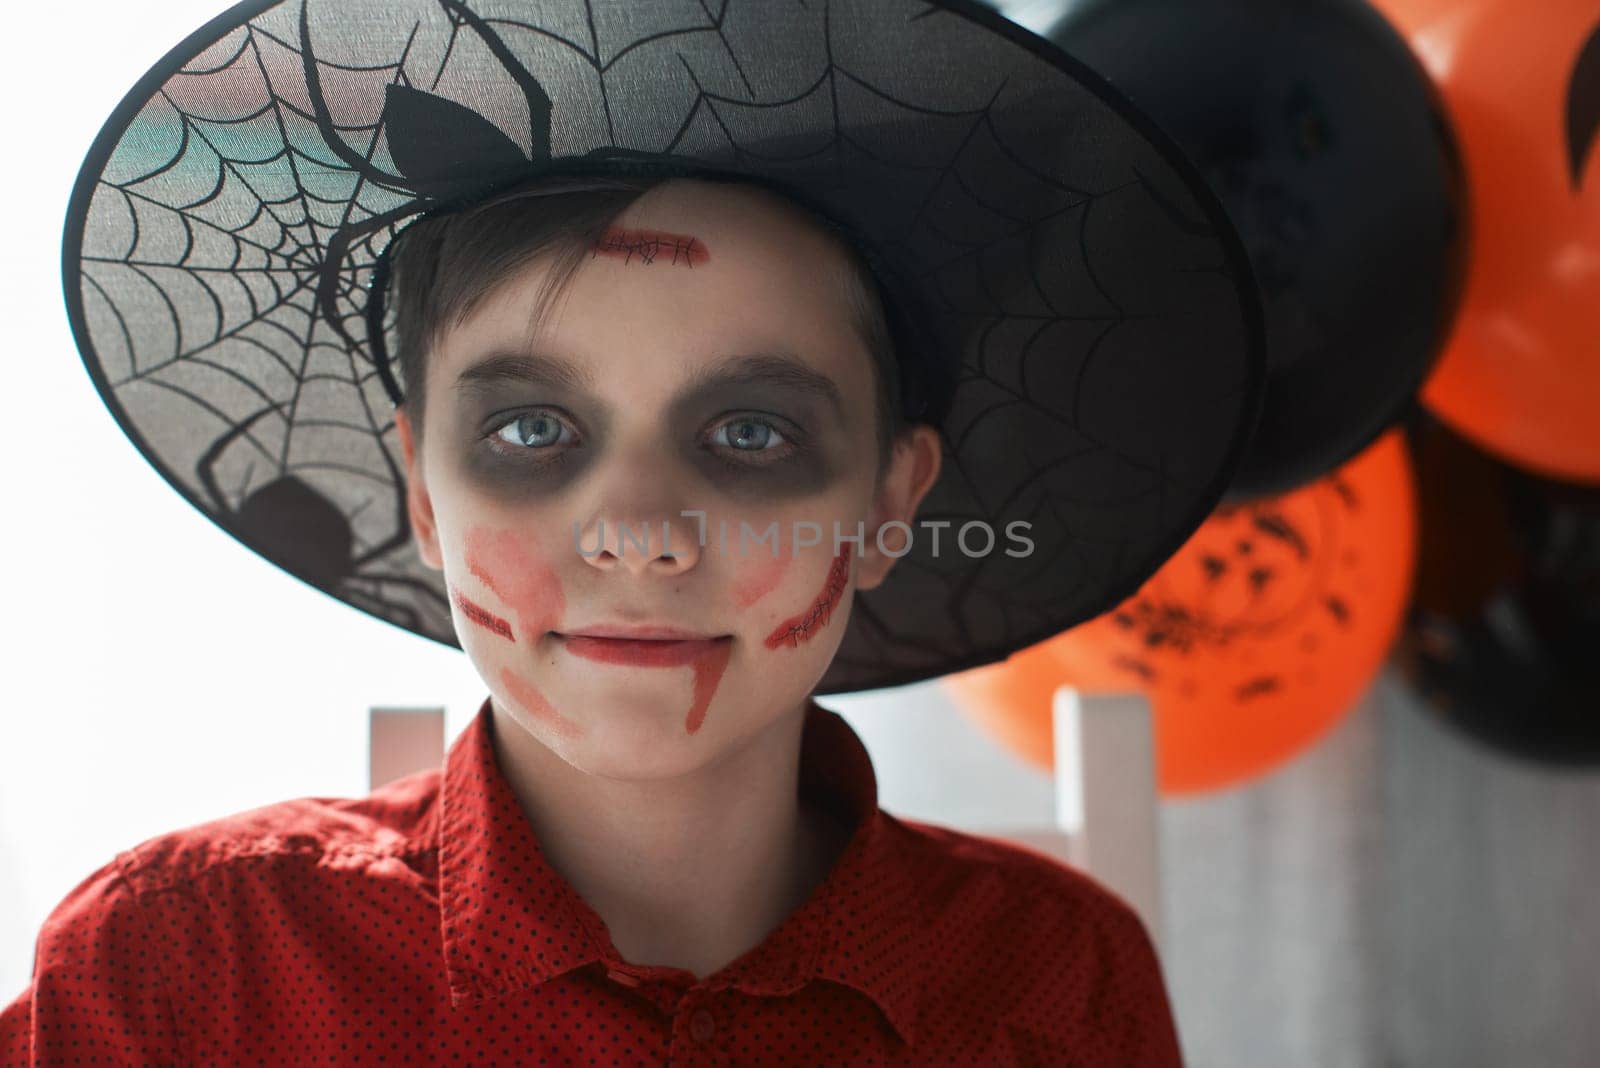 Halloween carnival or masquerade concept by rusak